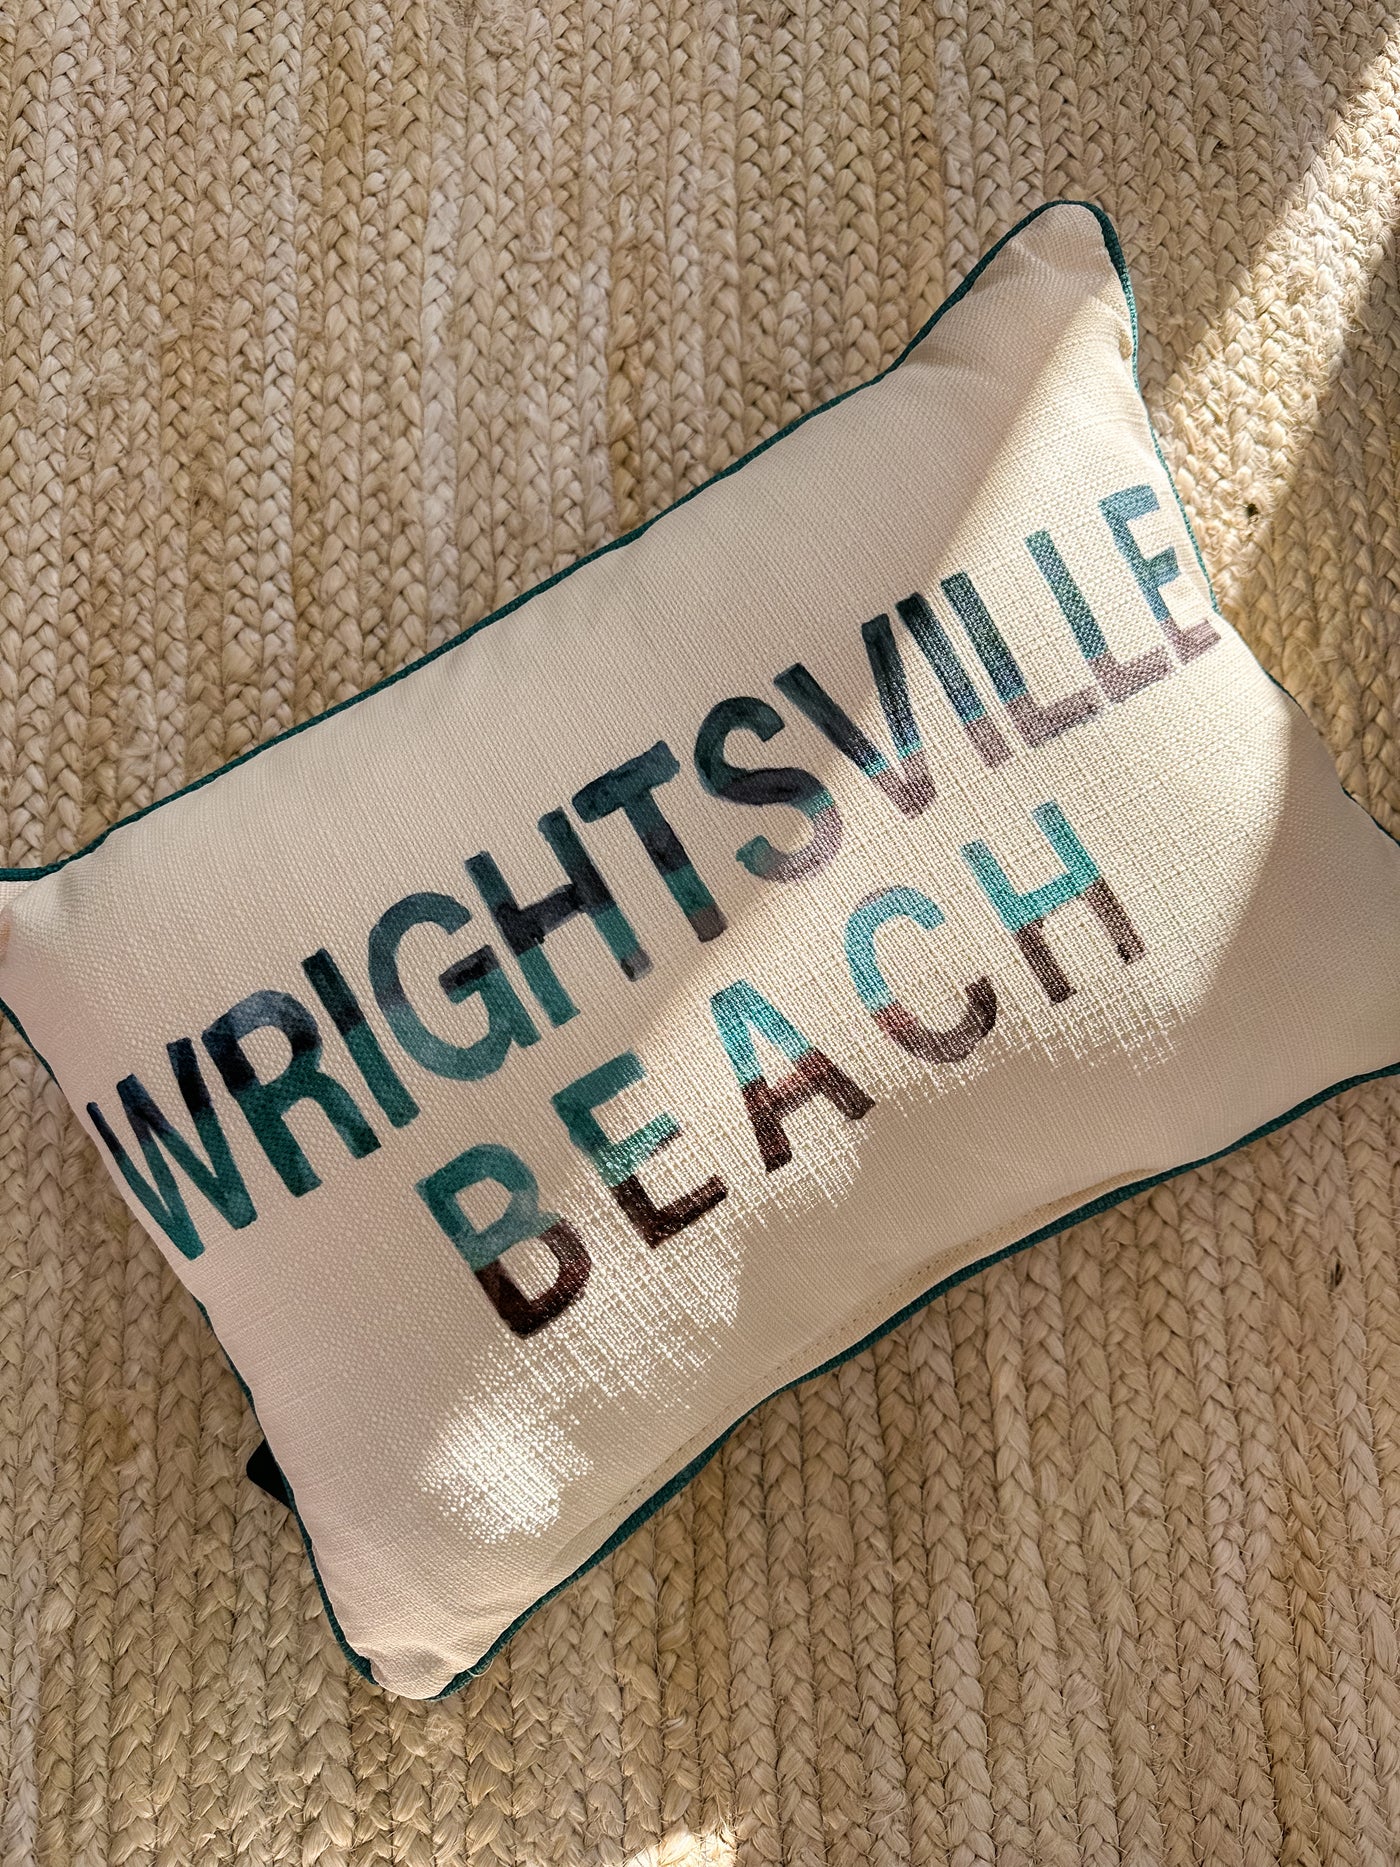 Classic Wrightsville Beach Lumbar Pillow